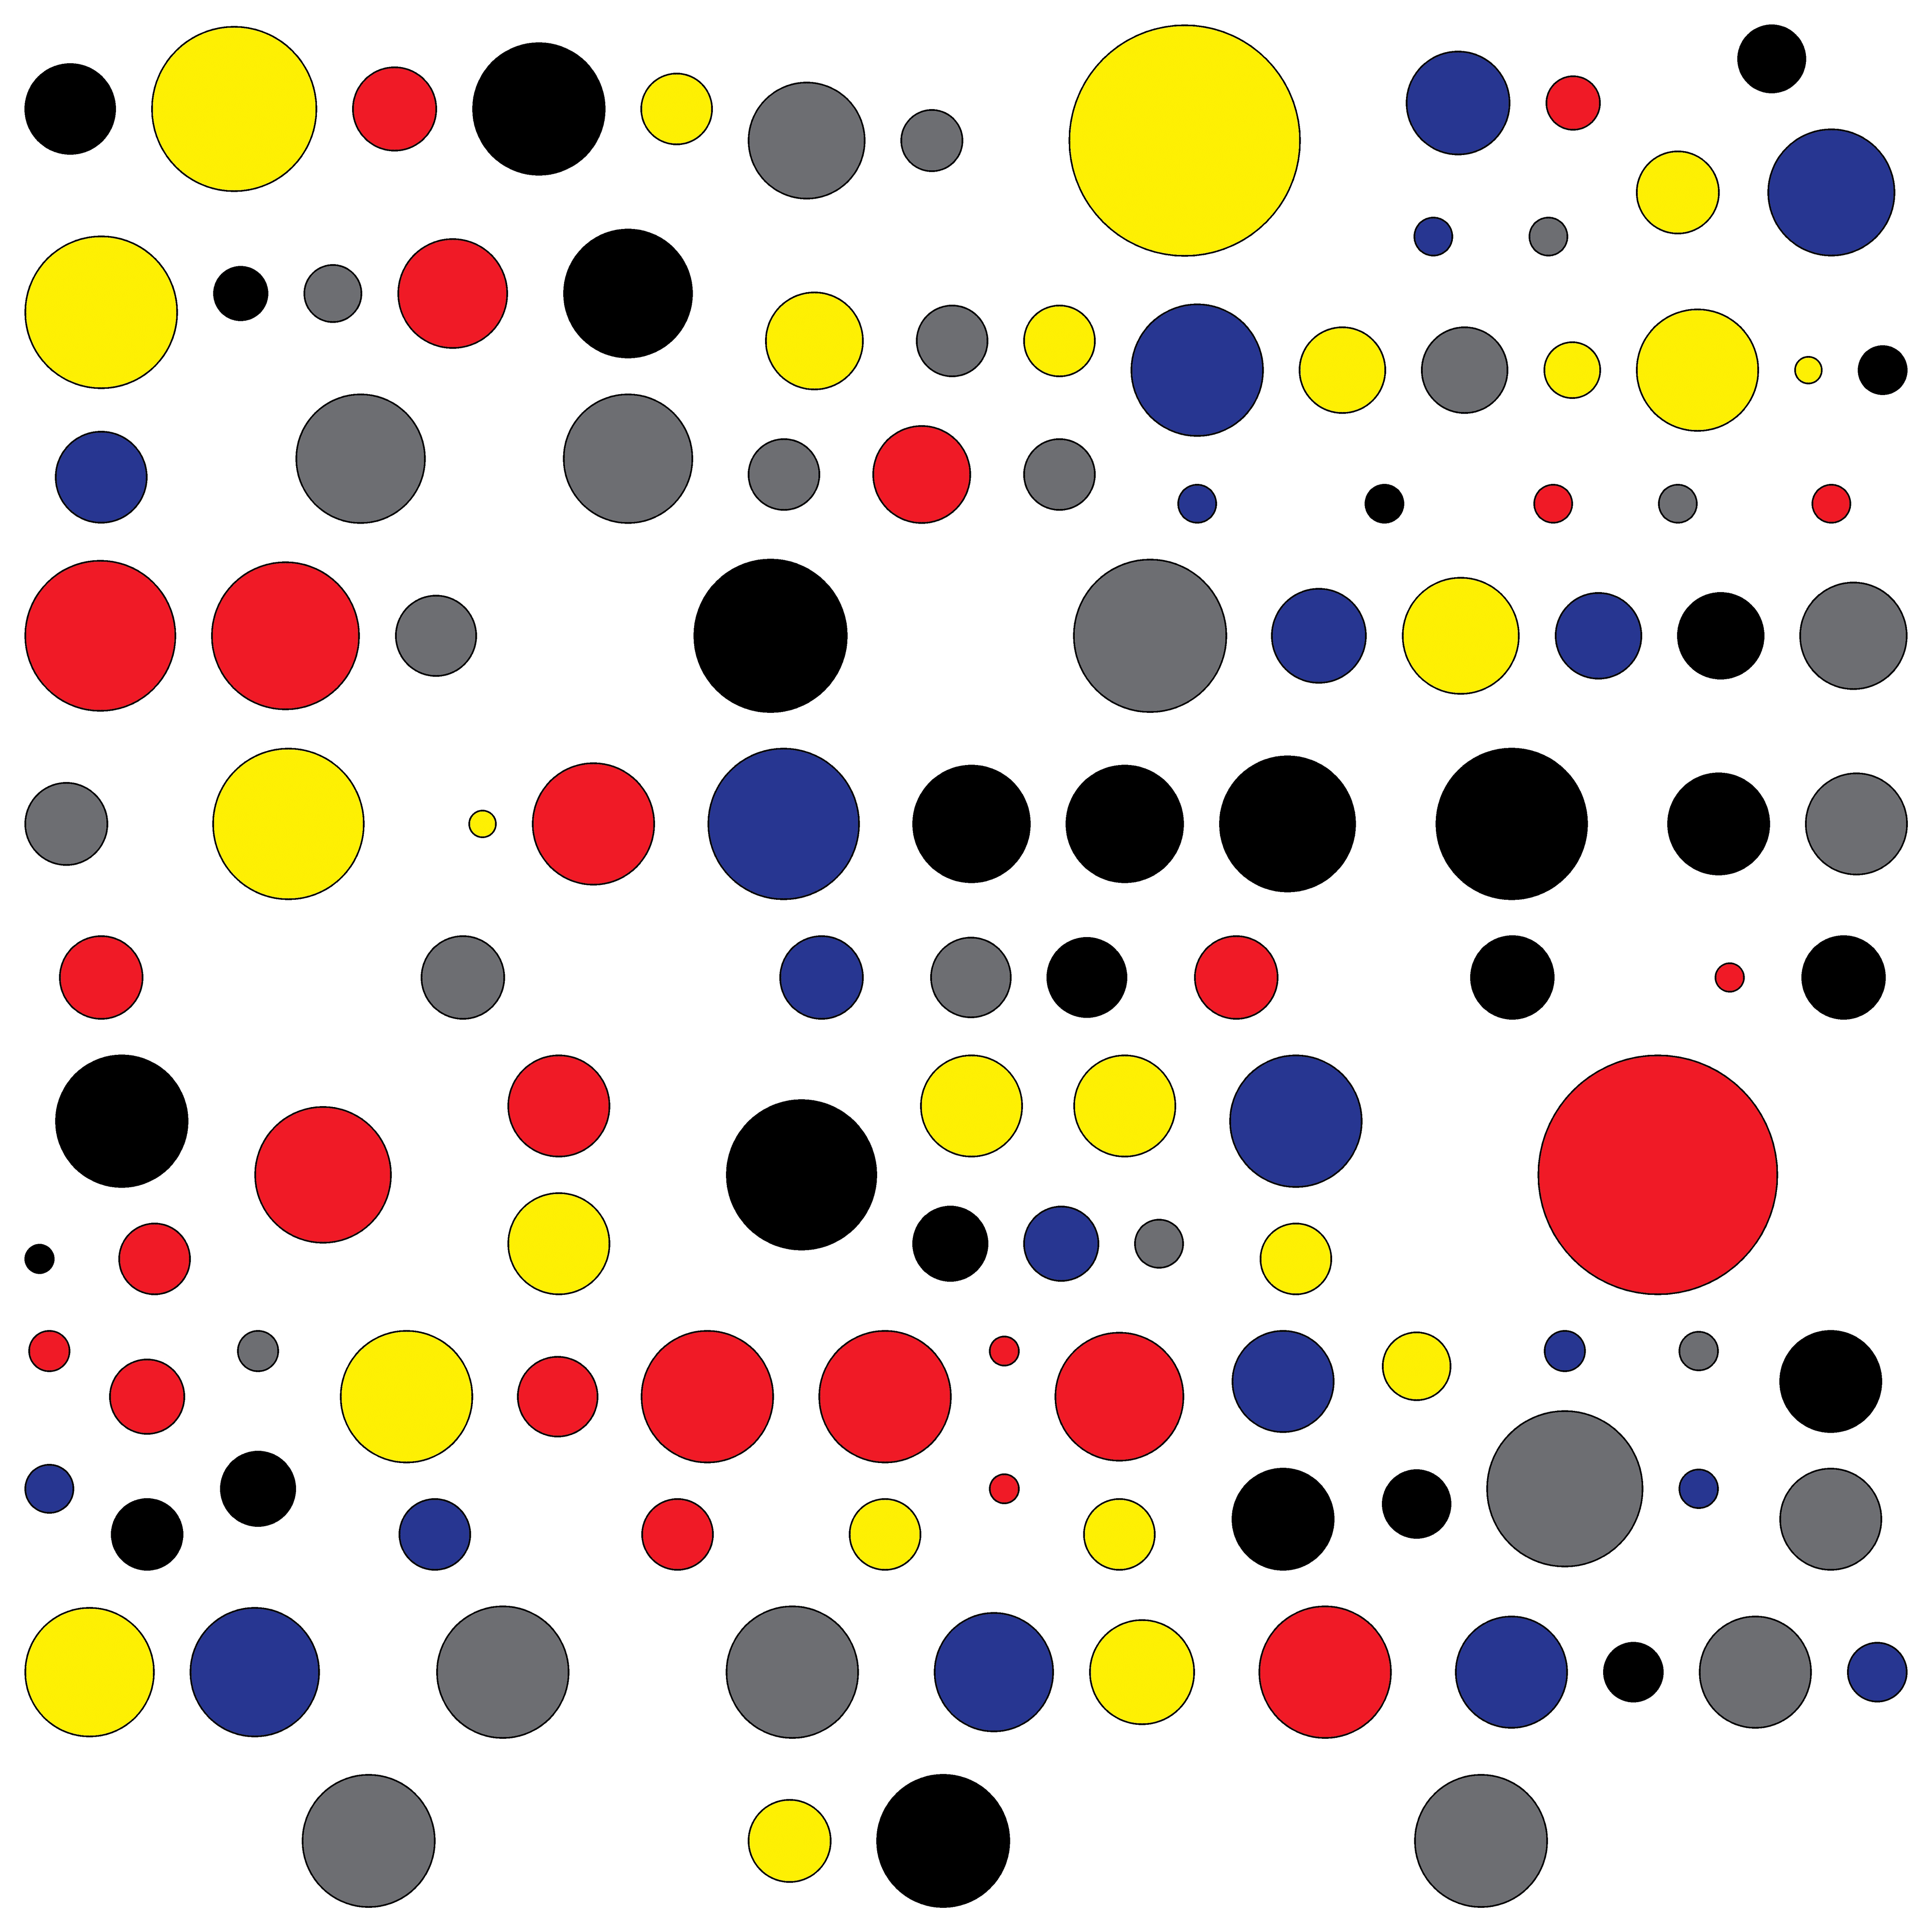 'Mondrian Bubbles' - Limited Edition - MooniTooki Project - Abstract NFT Art @ 6480 x 6480 pixels.